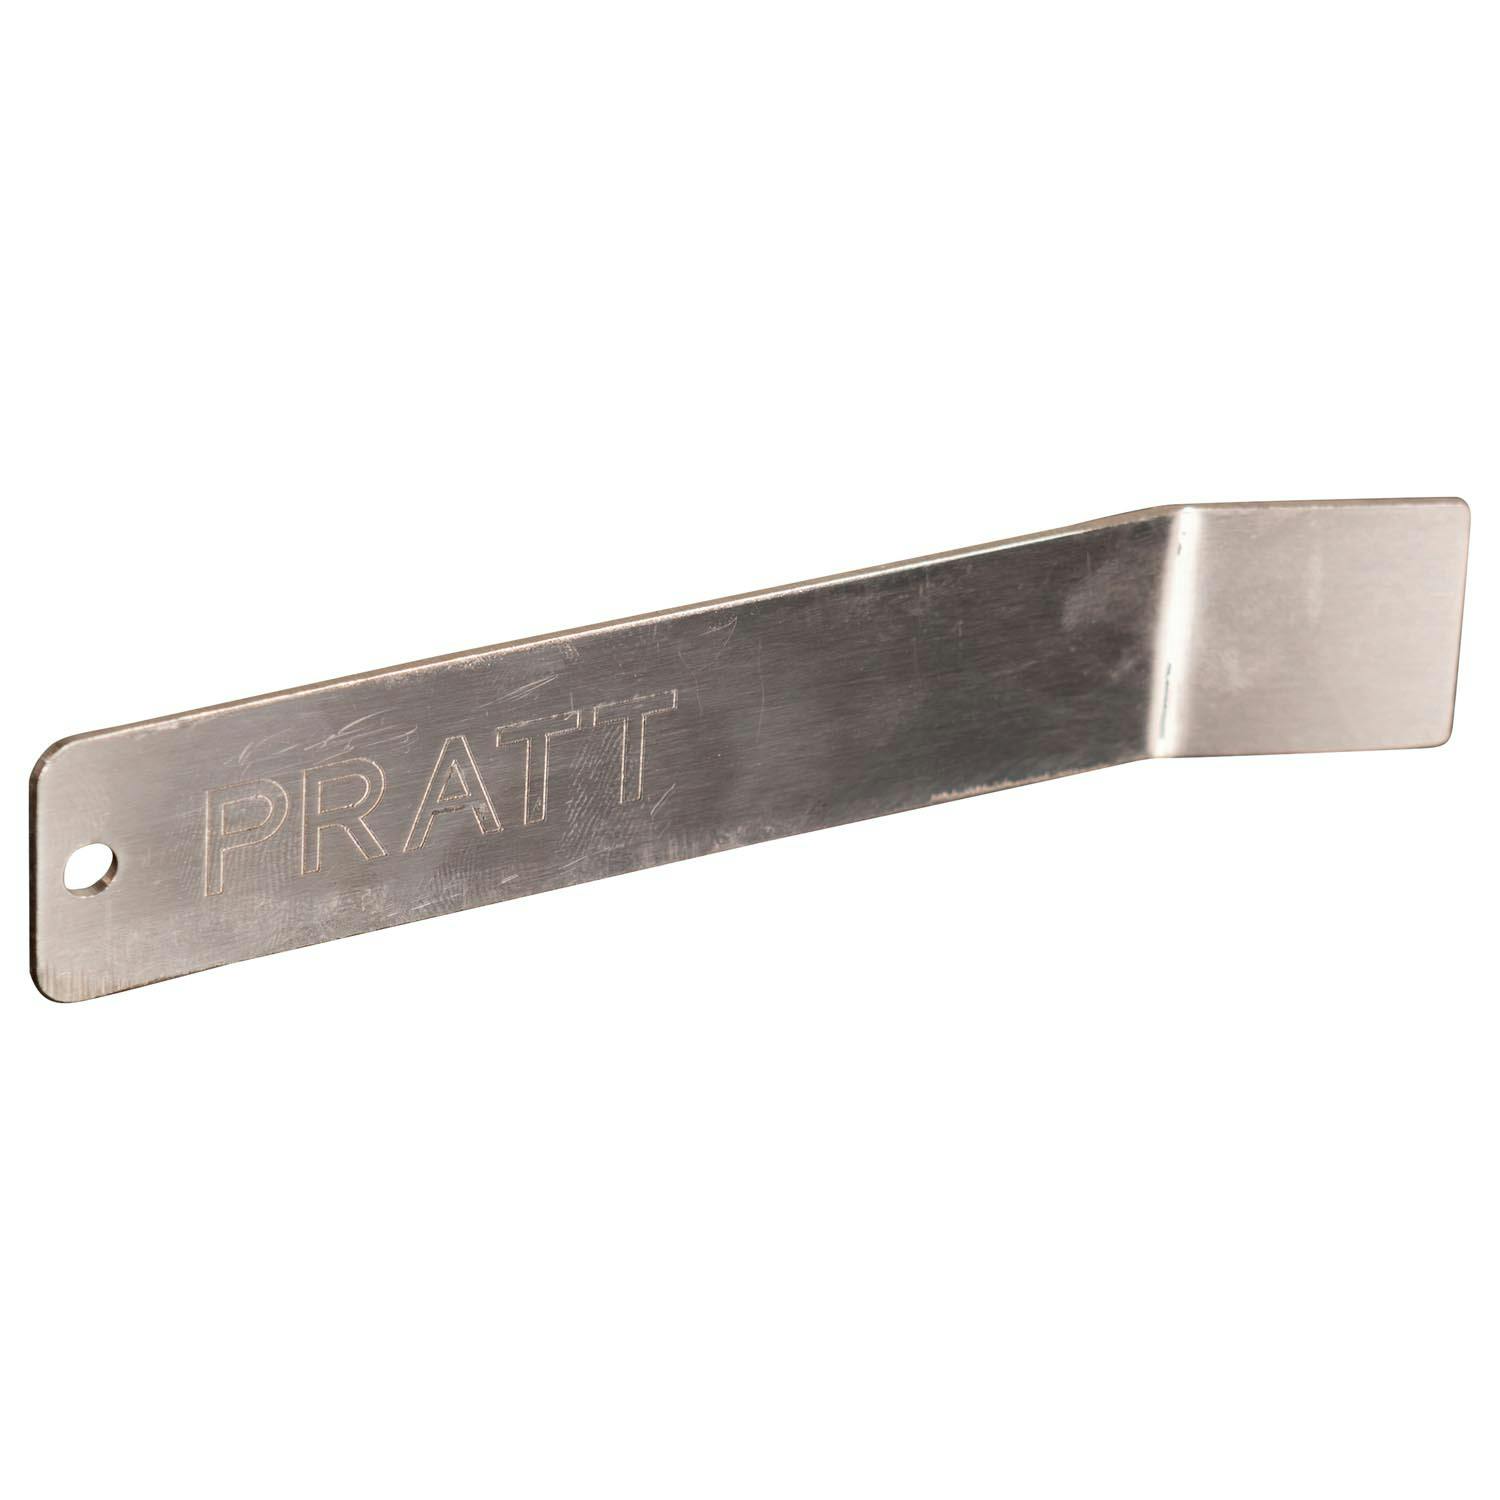 Pratt Stainless Steel Aerator Removal Key